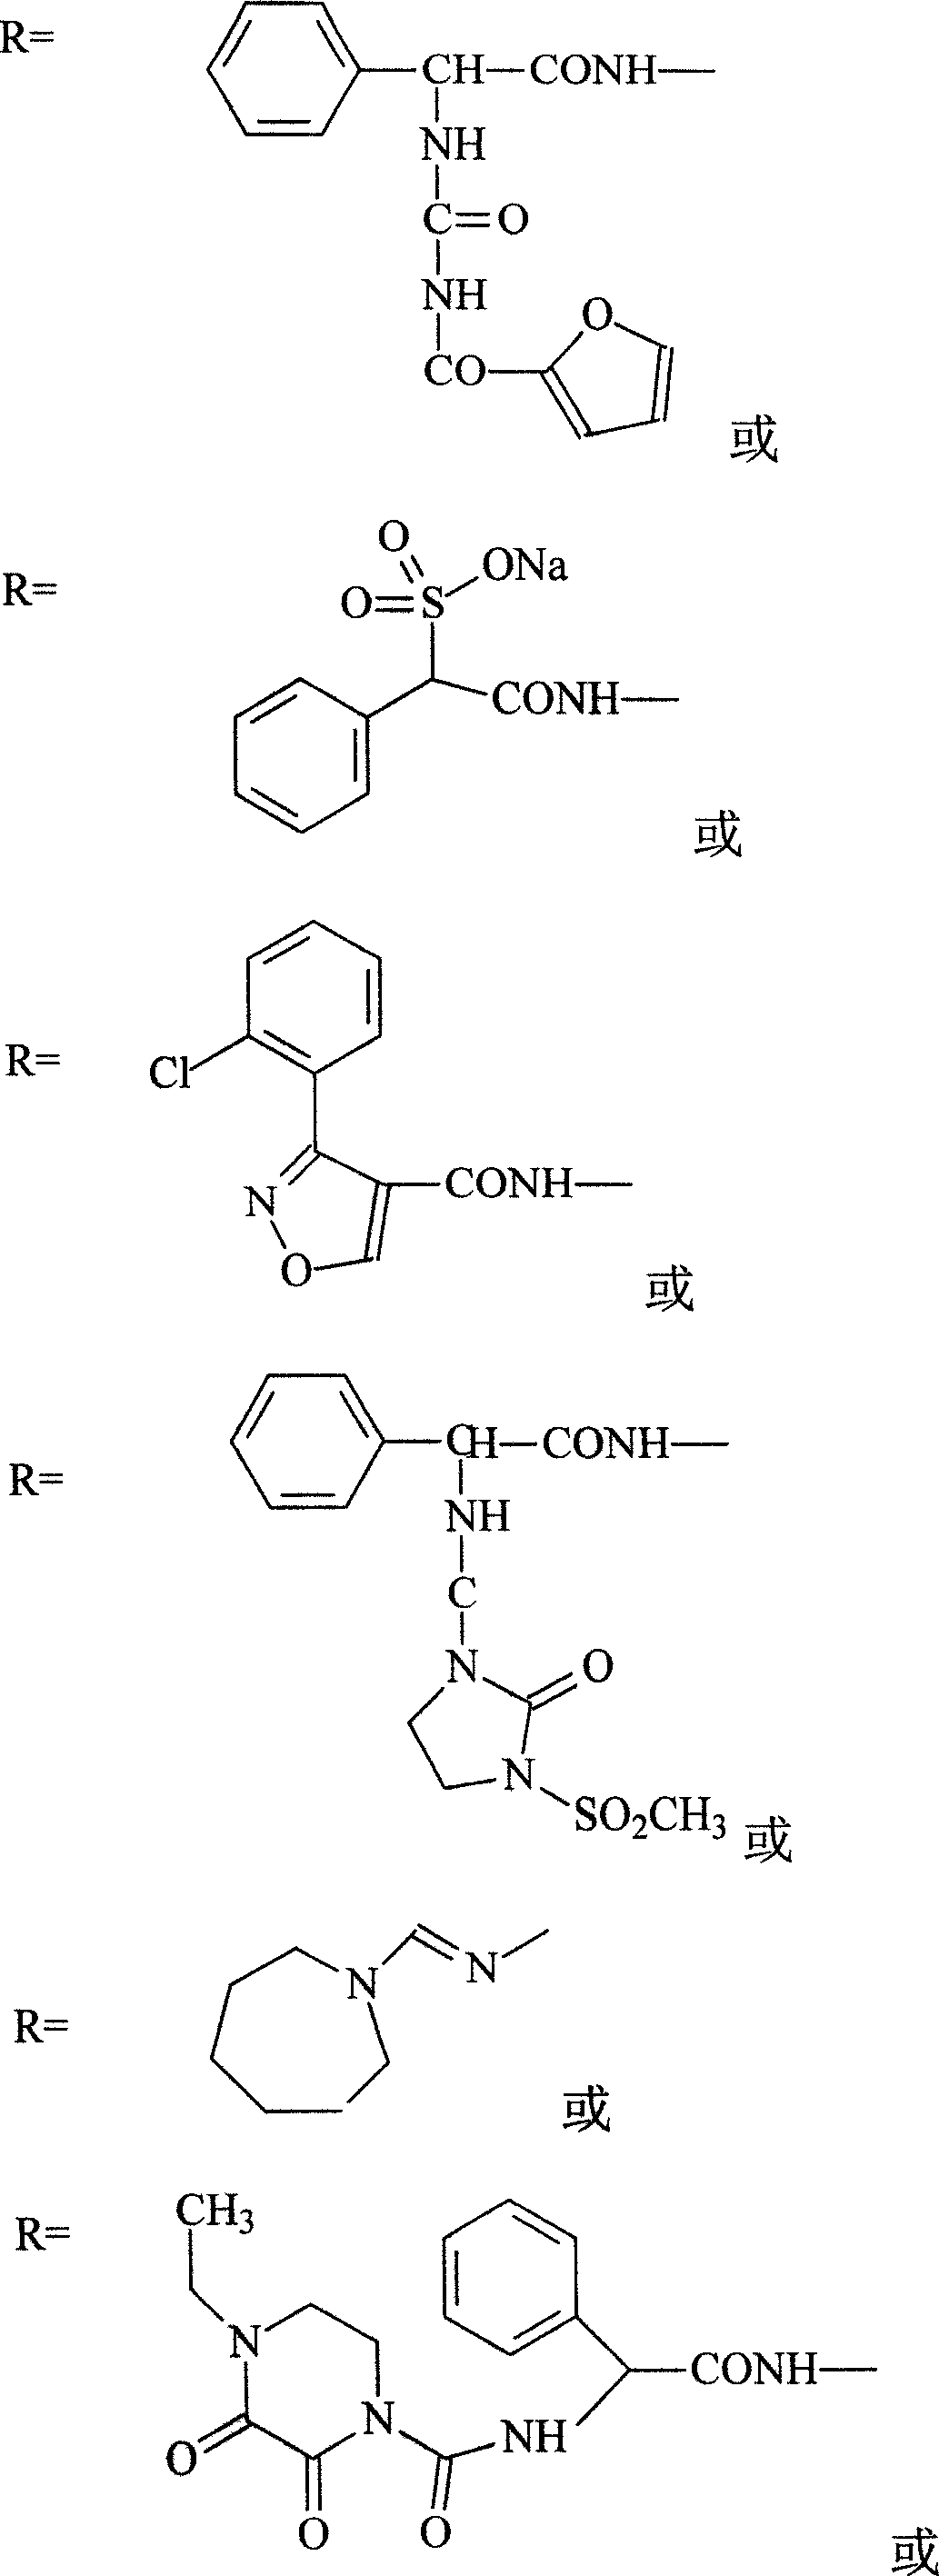 Organic amine salt of cilin analog compound and its preparation method